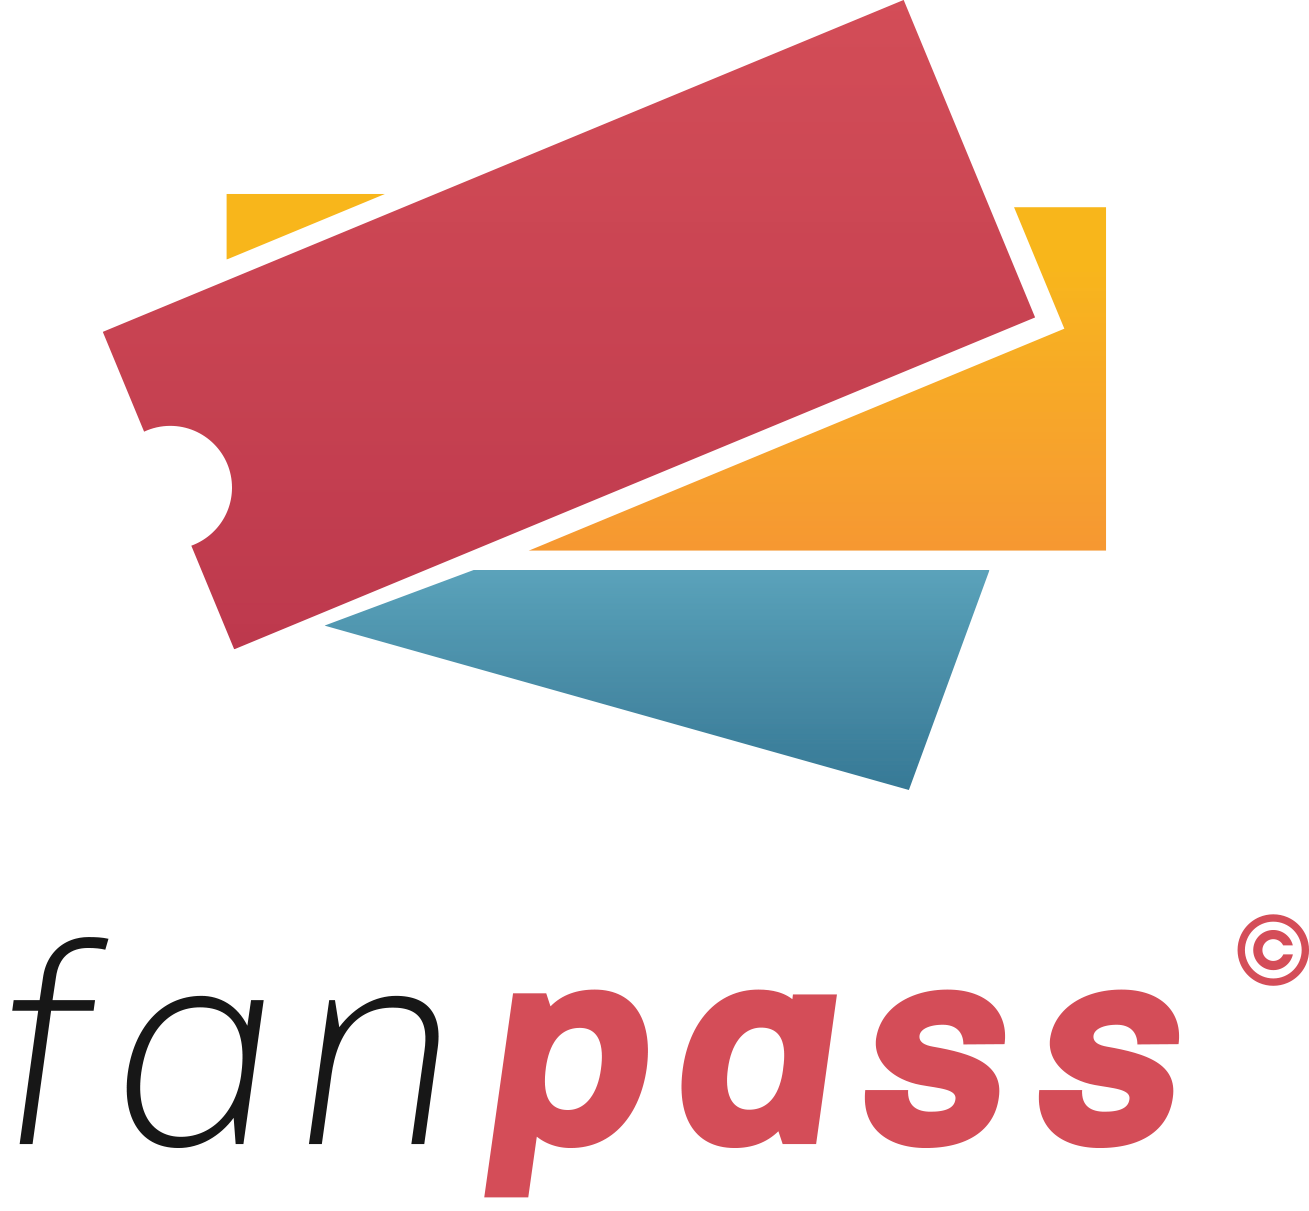 FanPass